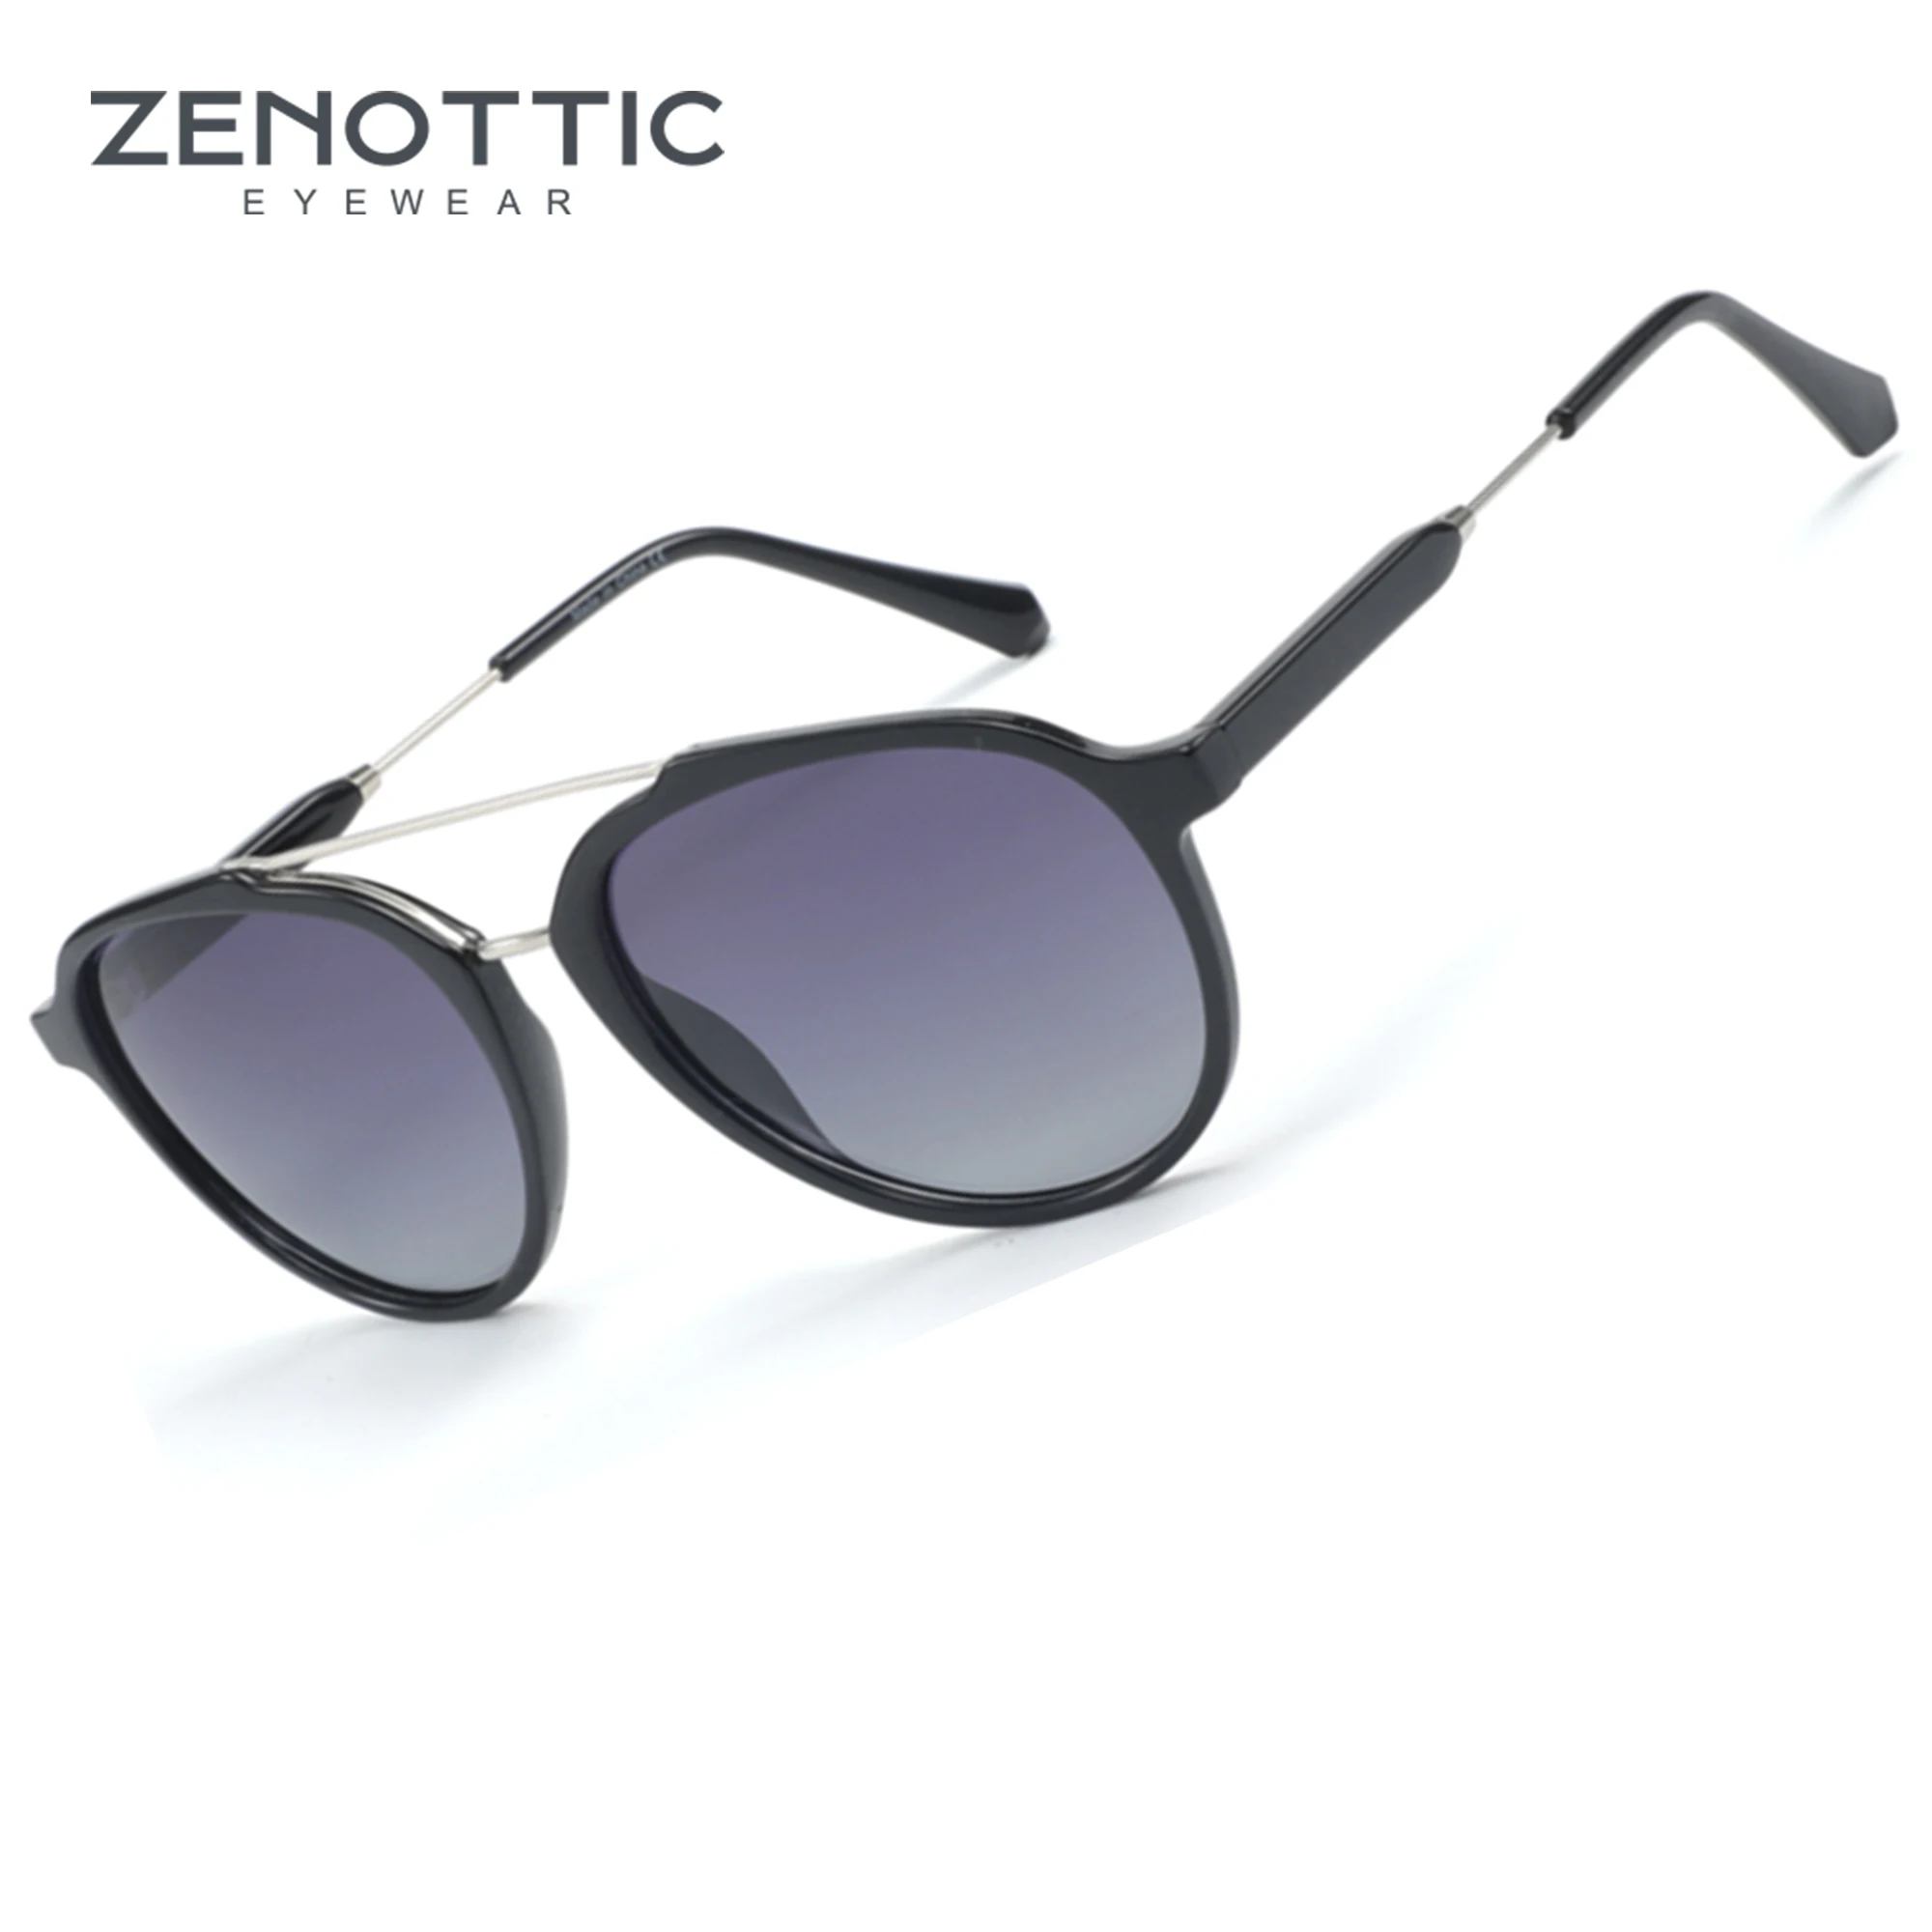 

ZENOTTIC Fashion Aviator Polarized Sunglasses for Men Women Premium Metal Frame Pilot Sun Glasses UV 400 Protection Shade 430004